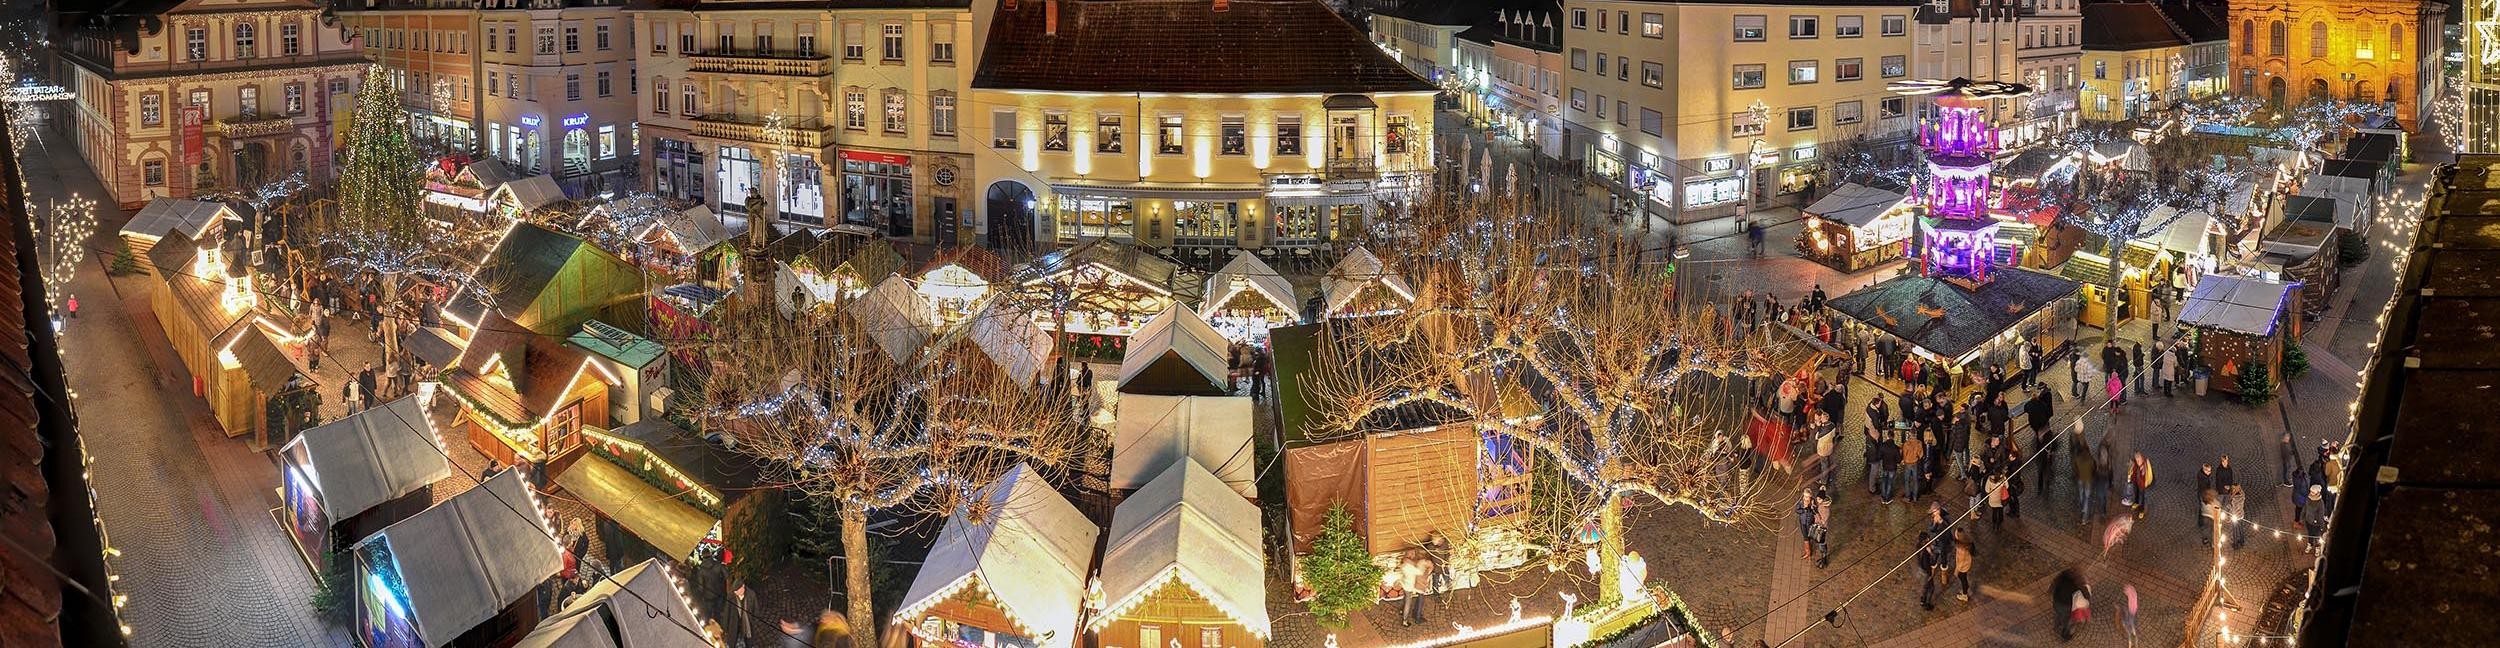 Aerial view of the Rastatt Christmas market